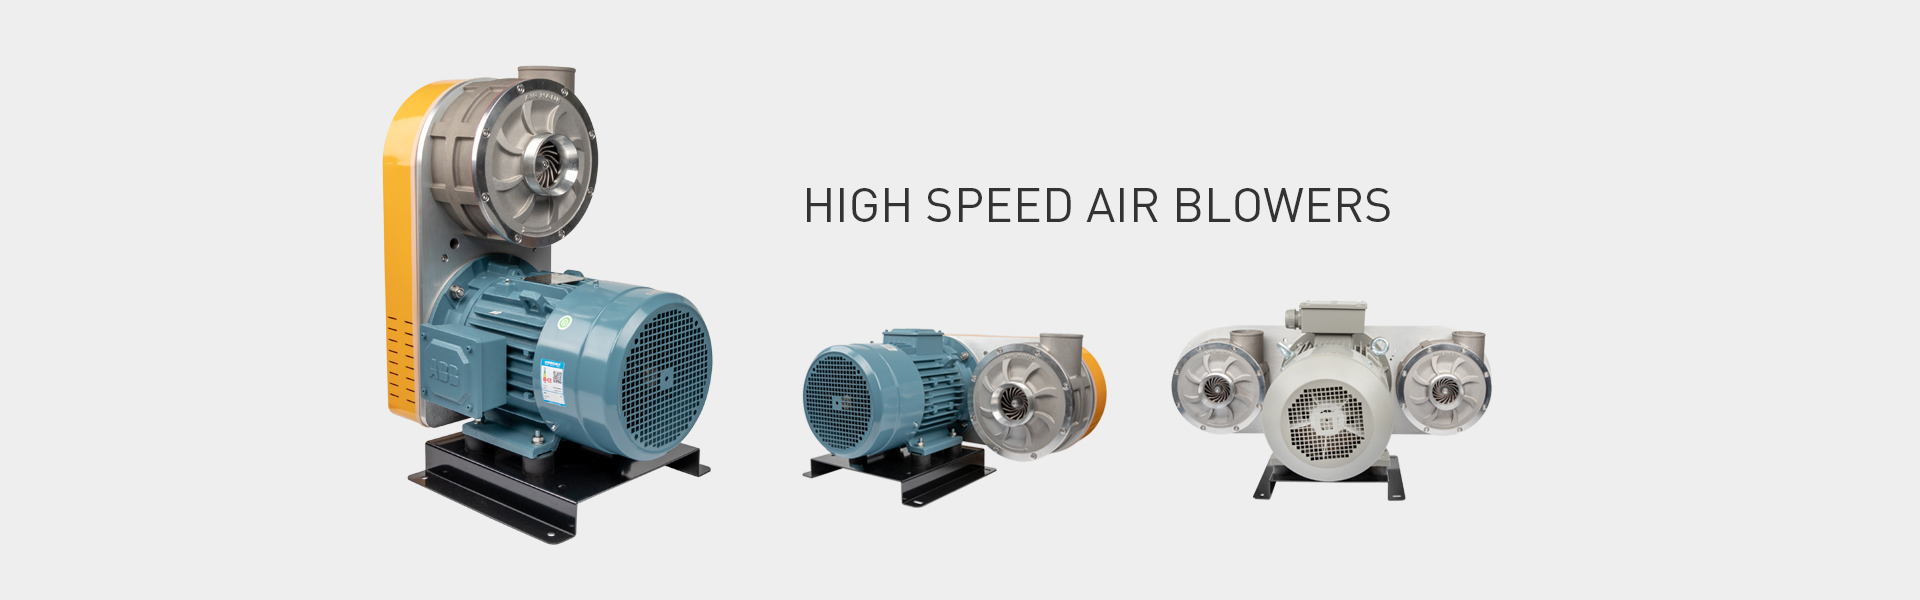 high speed turbine blower_high speed air blower_Super air blower